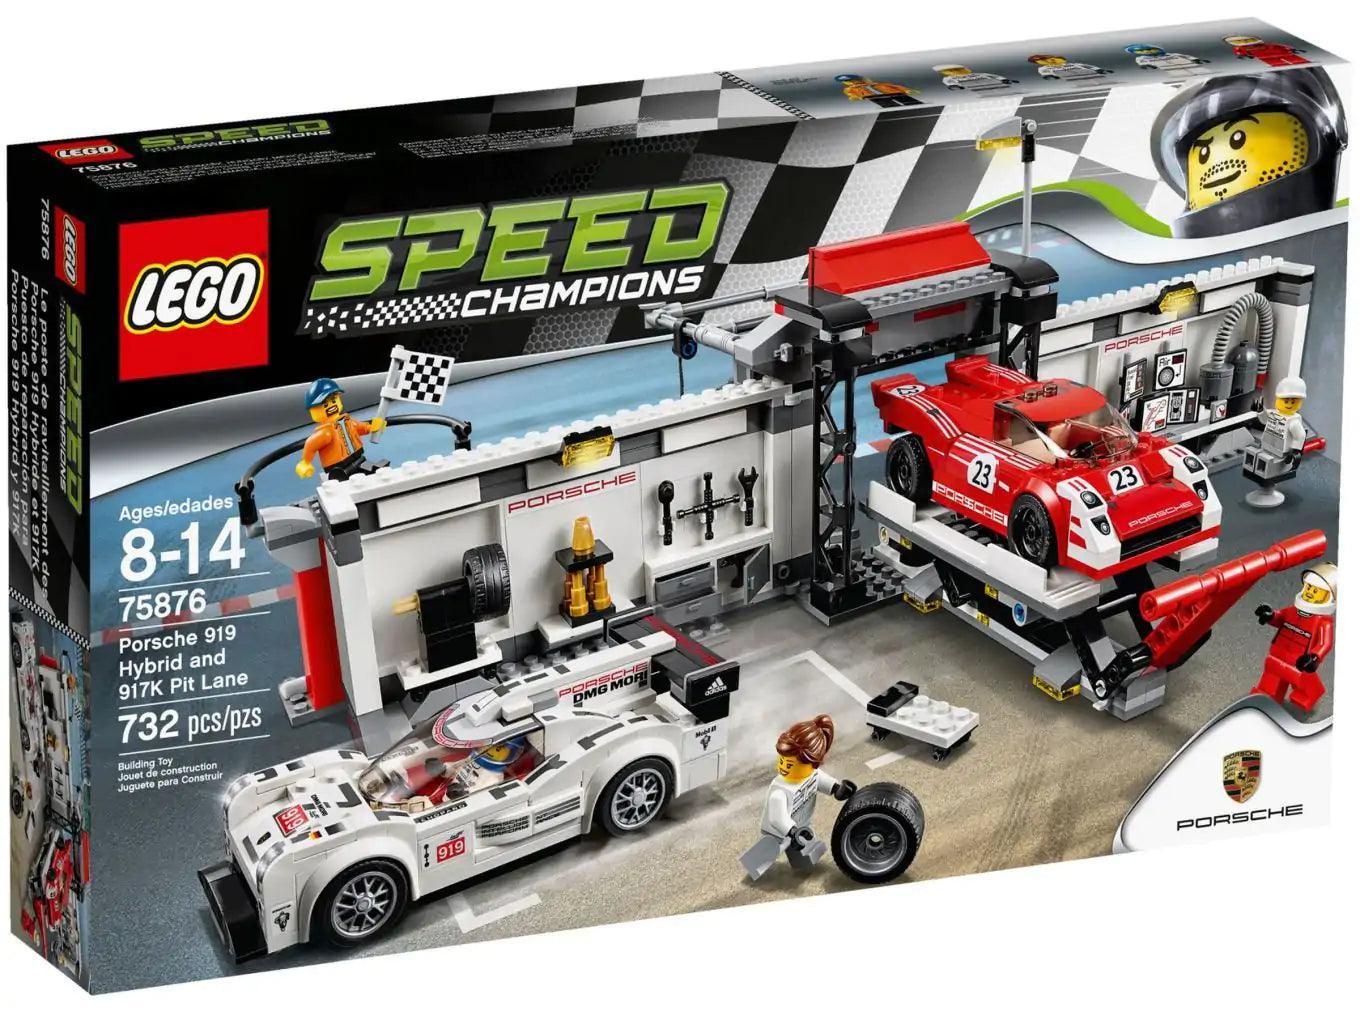 LEGO Porsche 919 Hybrid and 917K Pit Lane 75876 Speedchampions LEGO SPEEDCHAMPIONS @ 2TTOYS LEGO €. 59.99